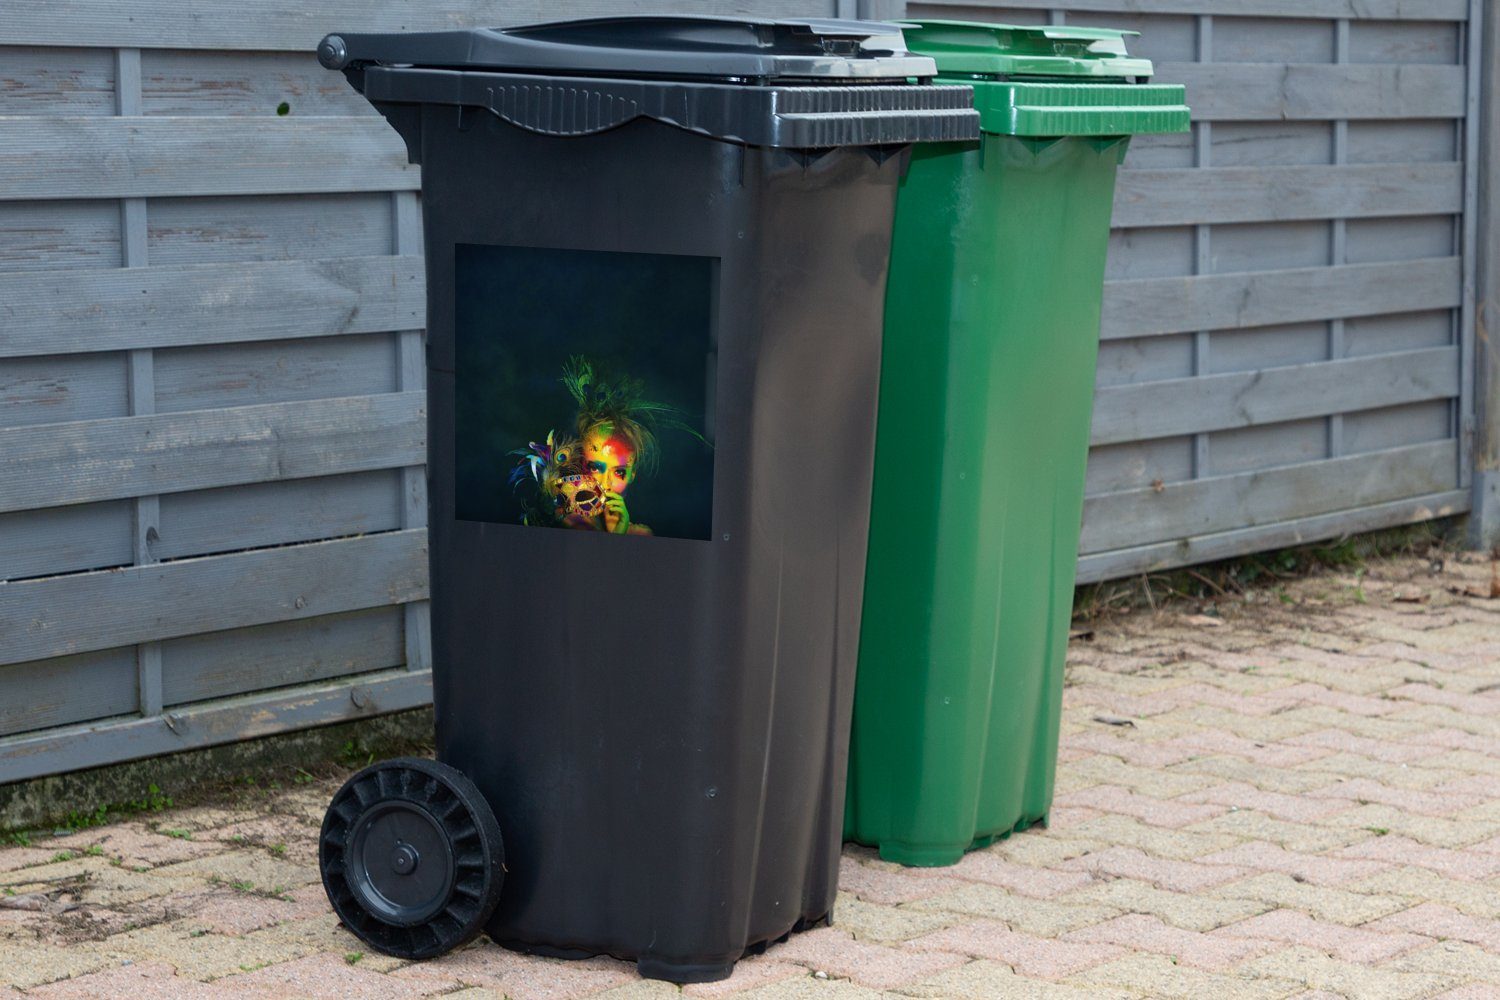 MuchoWow Wandsticker Frau feiert Fasching Mülltonne, Körperbemalung mit Mülleimer-aufkleber, bunter (1 St), Abfalbehälter Container, Sticker